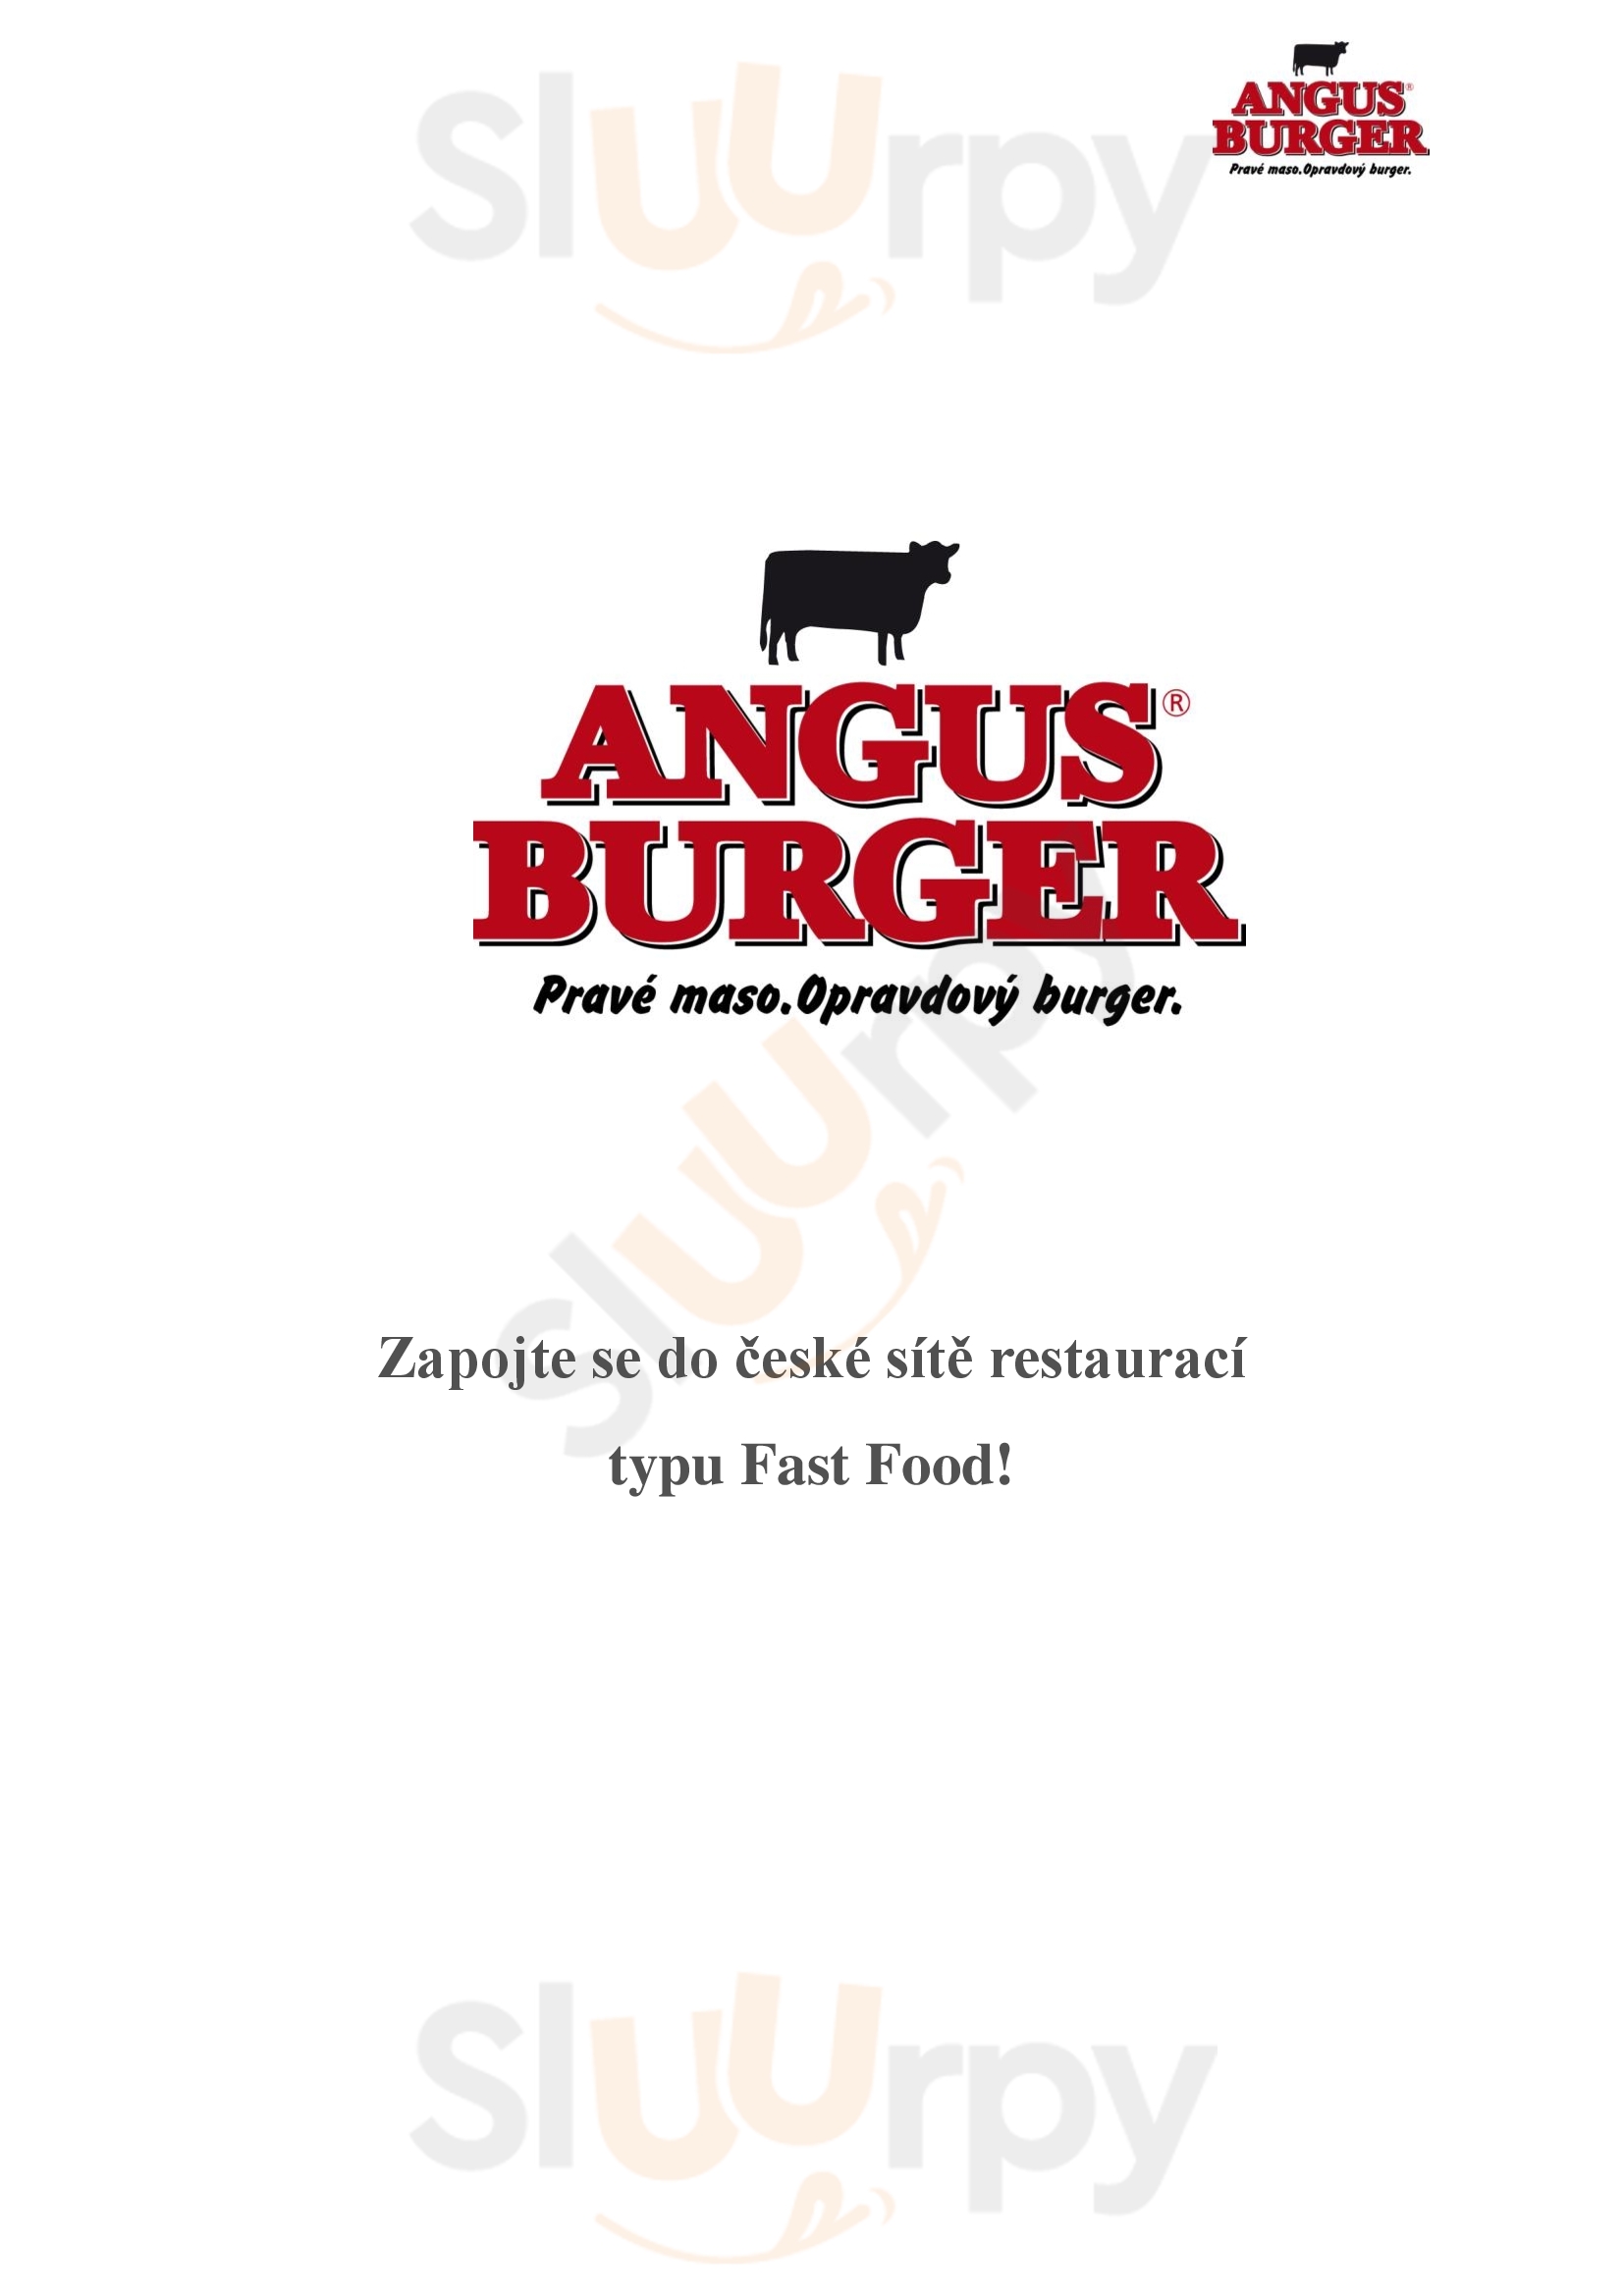 Angus Burger Plzeň Menu - 1